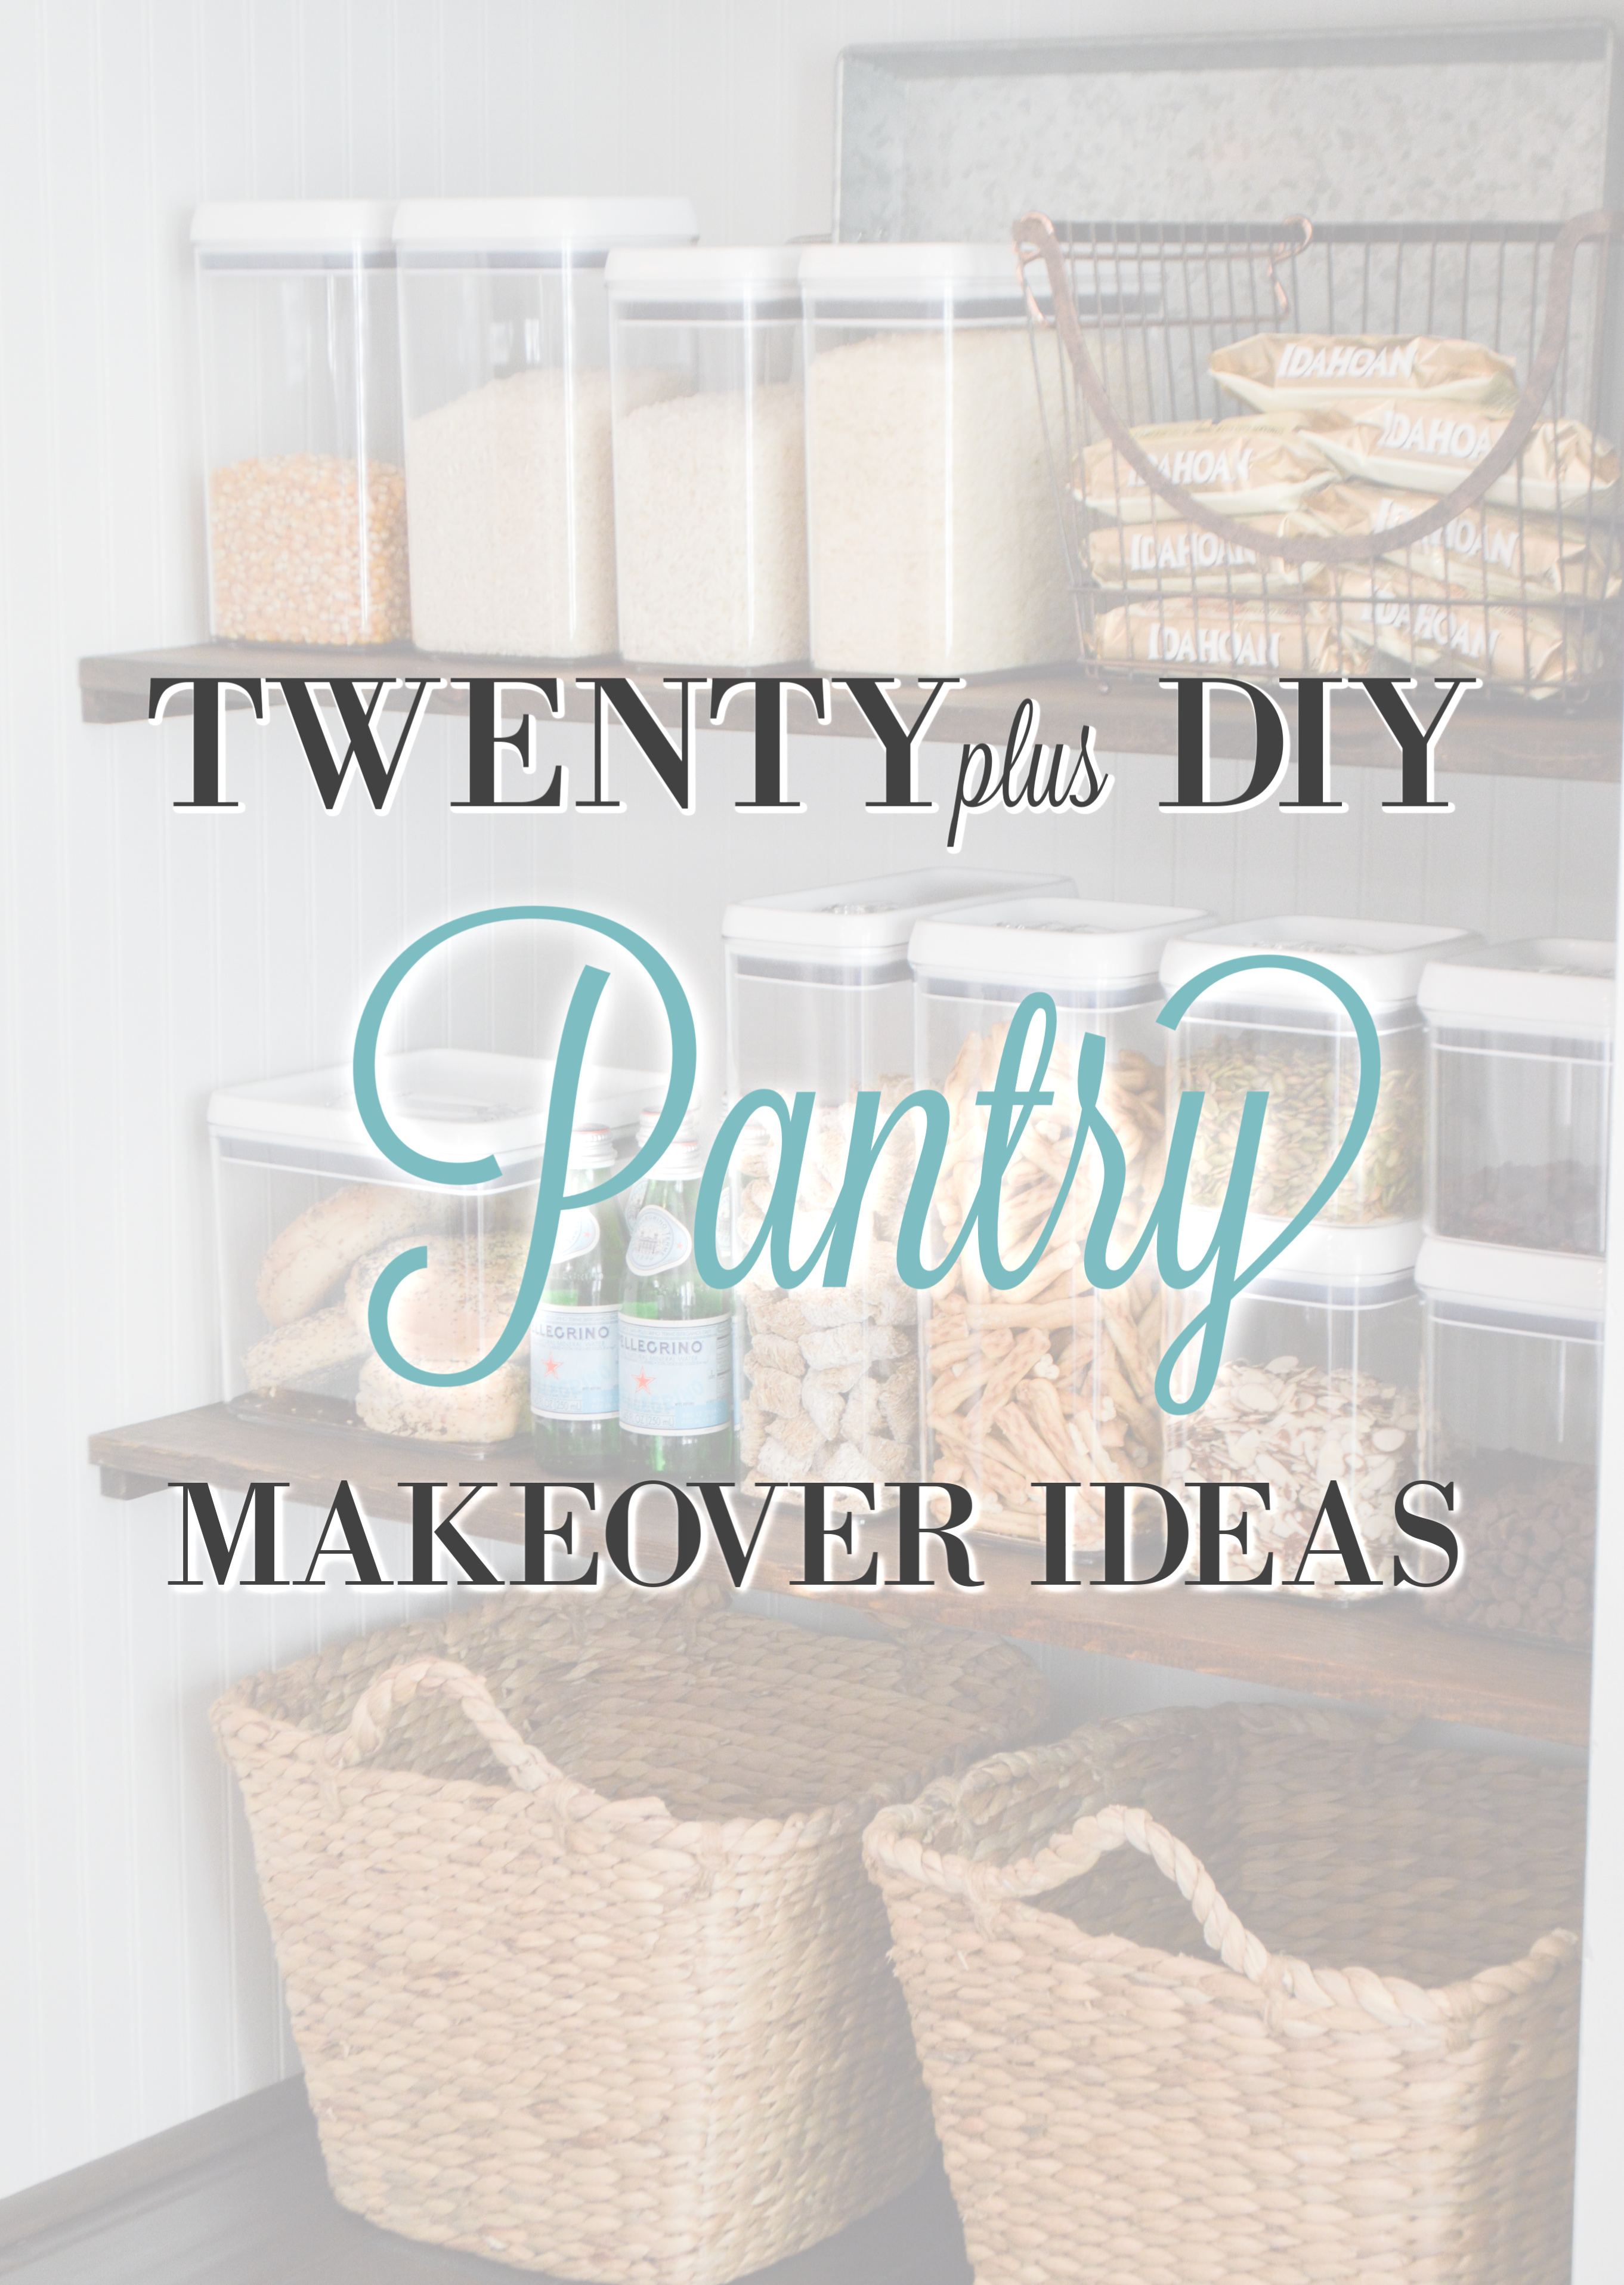 20 Gorgeous Pantry Closet Ideas for Your Kitchen